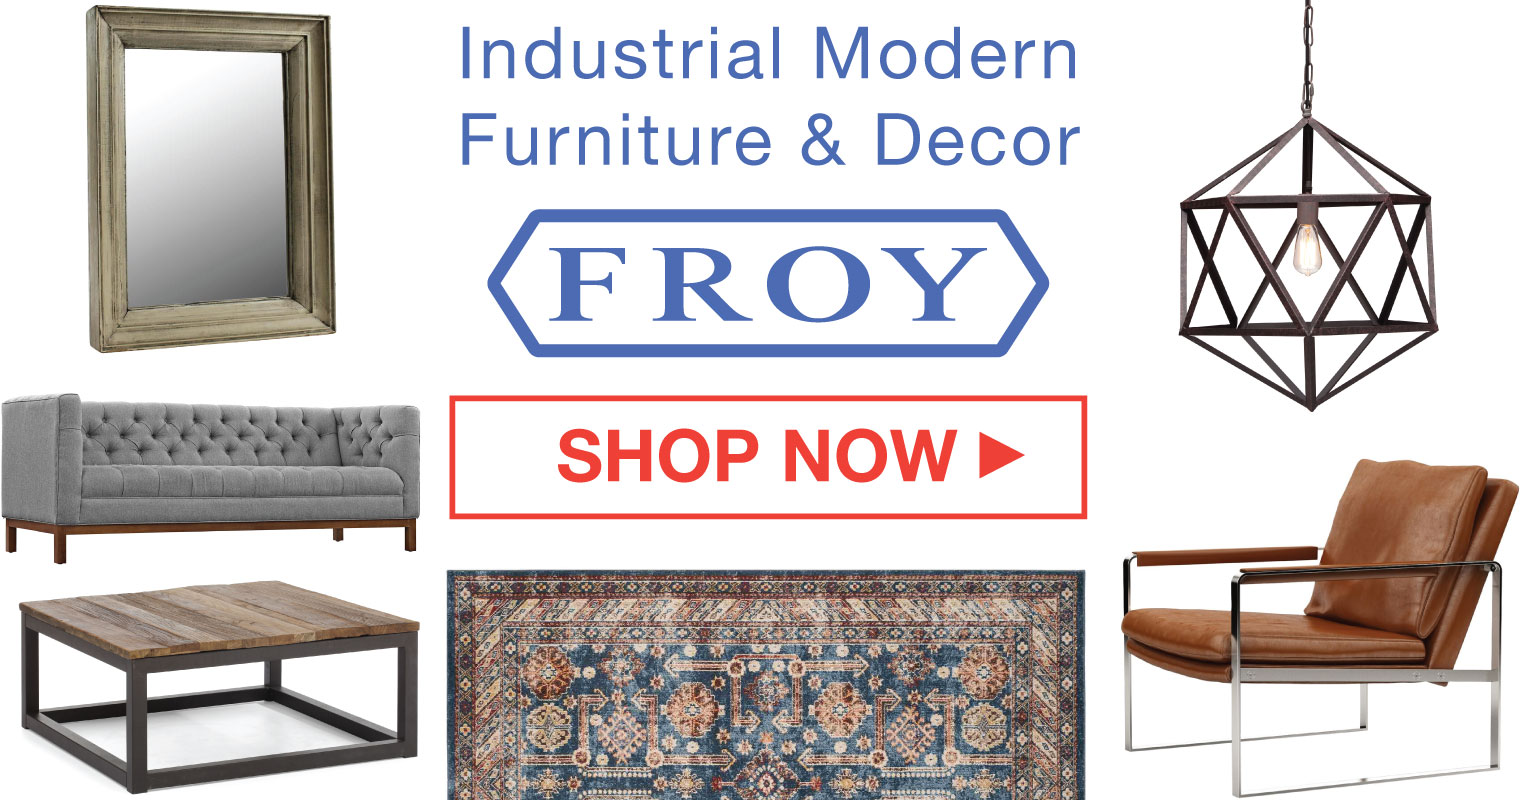 Industrial Furniture & Decor